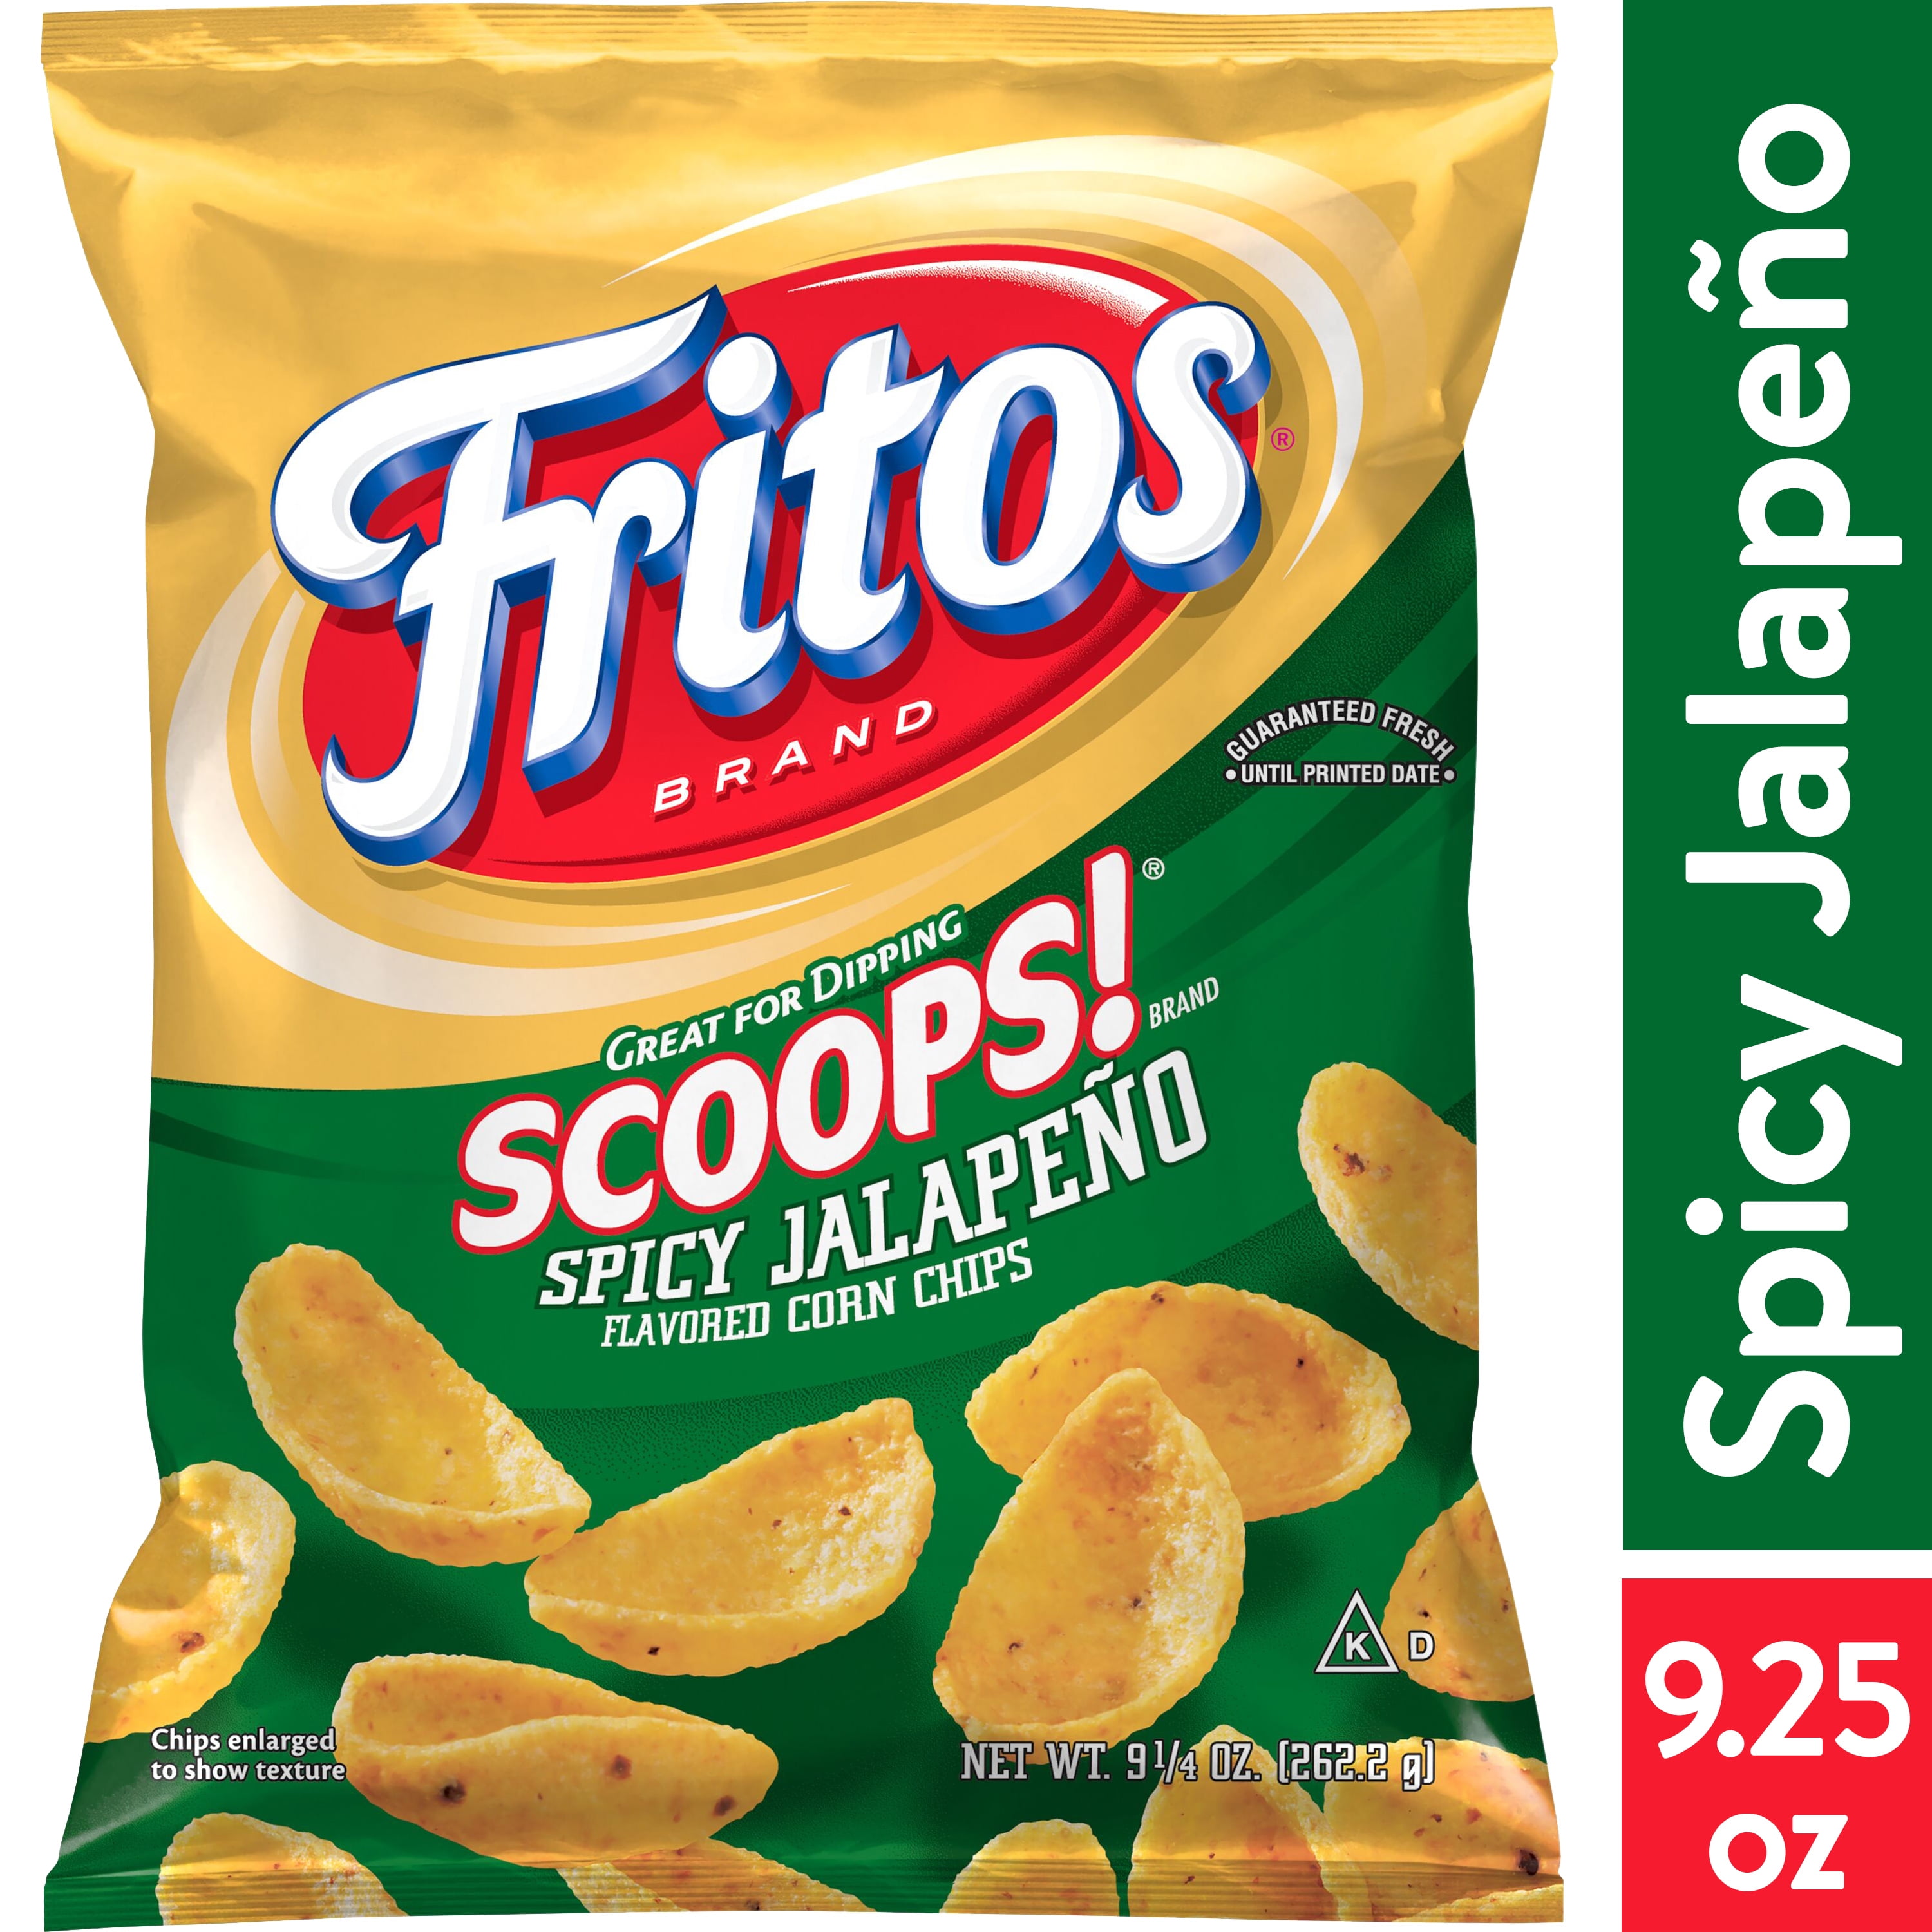 Frito Chips | engzenon.com